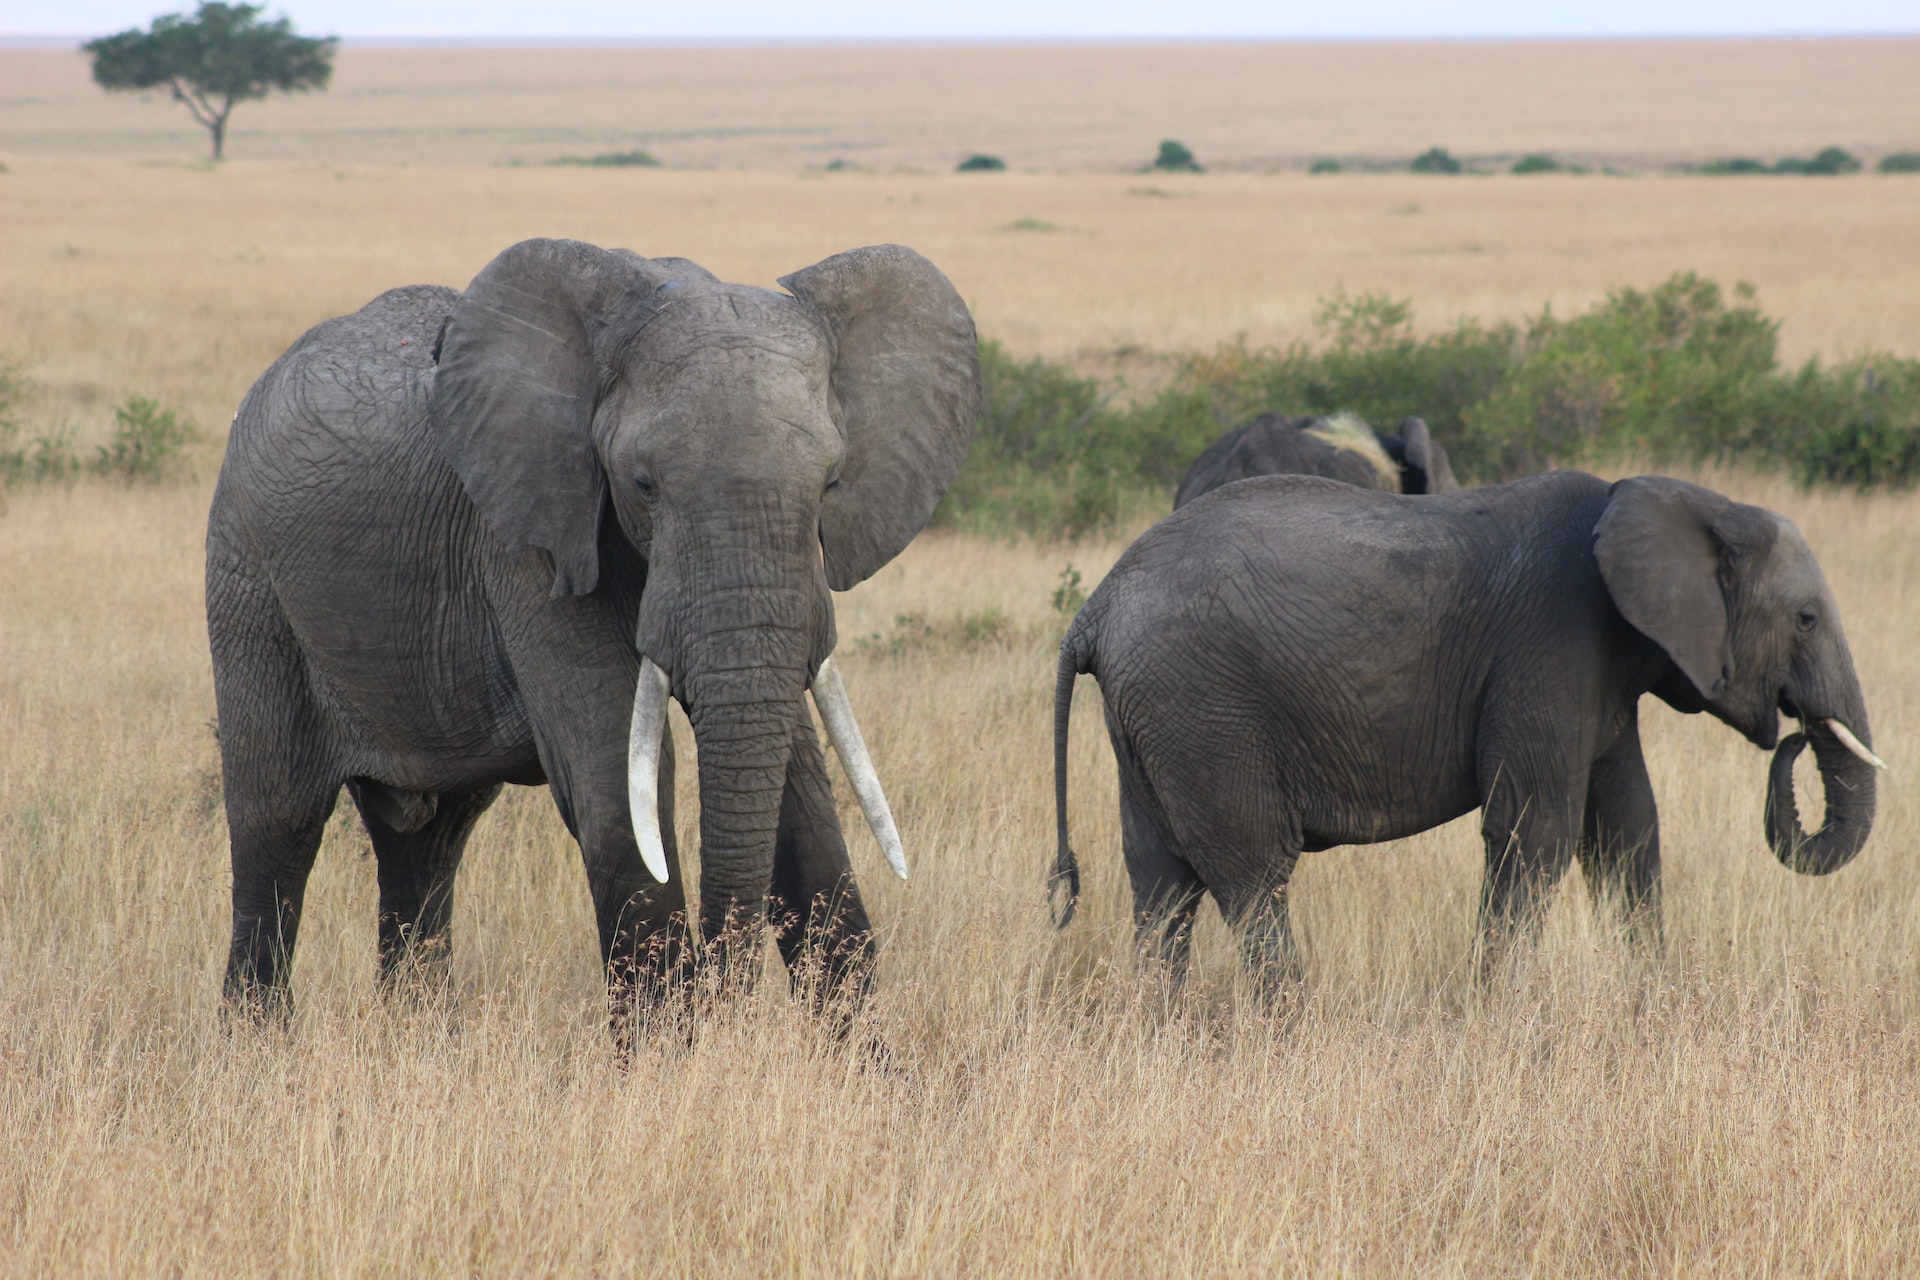 Elephans on a safari zone